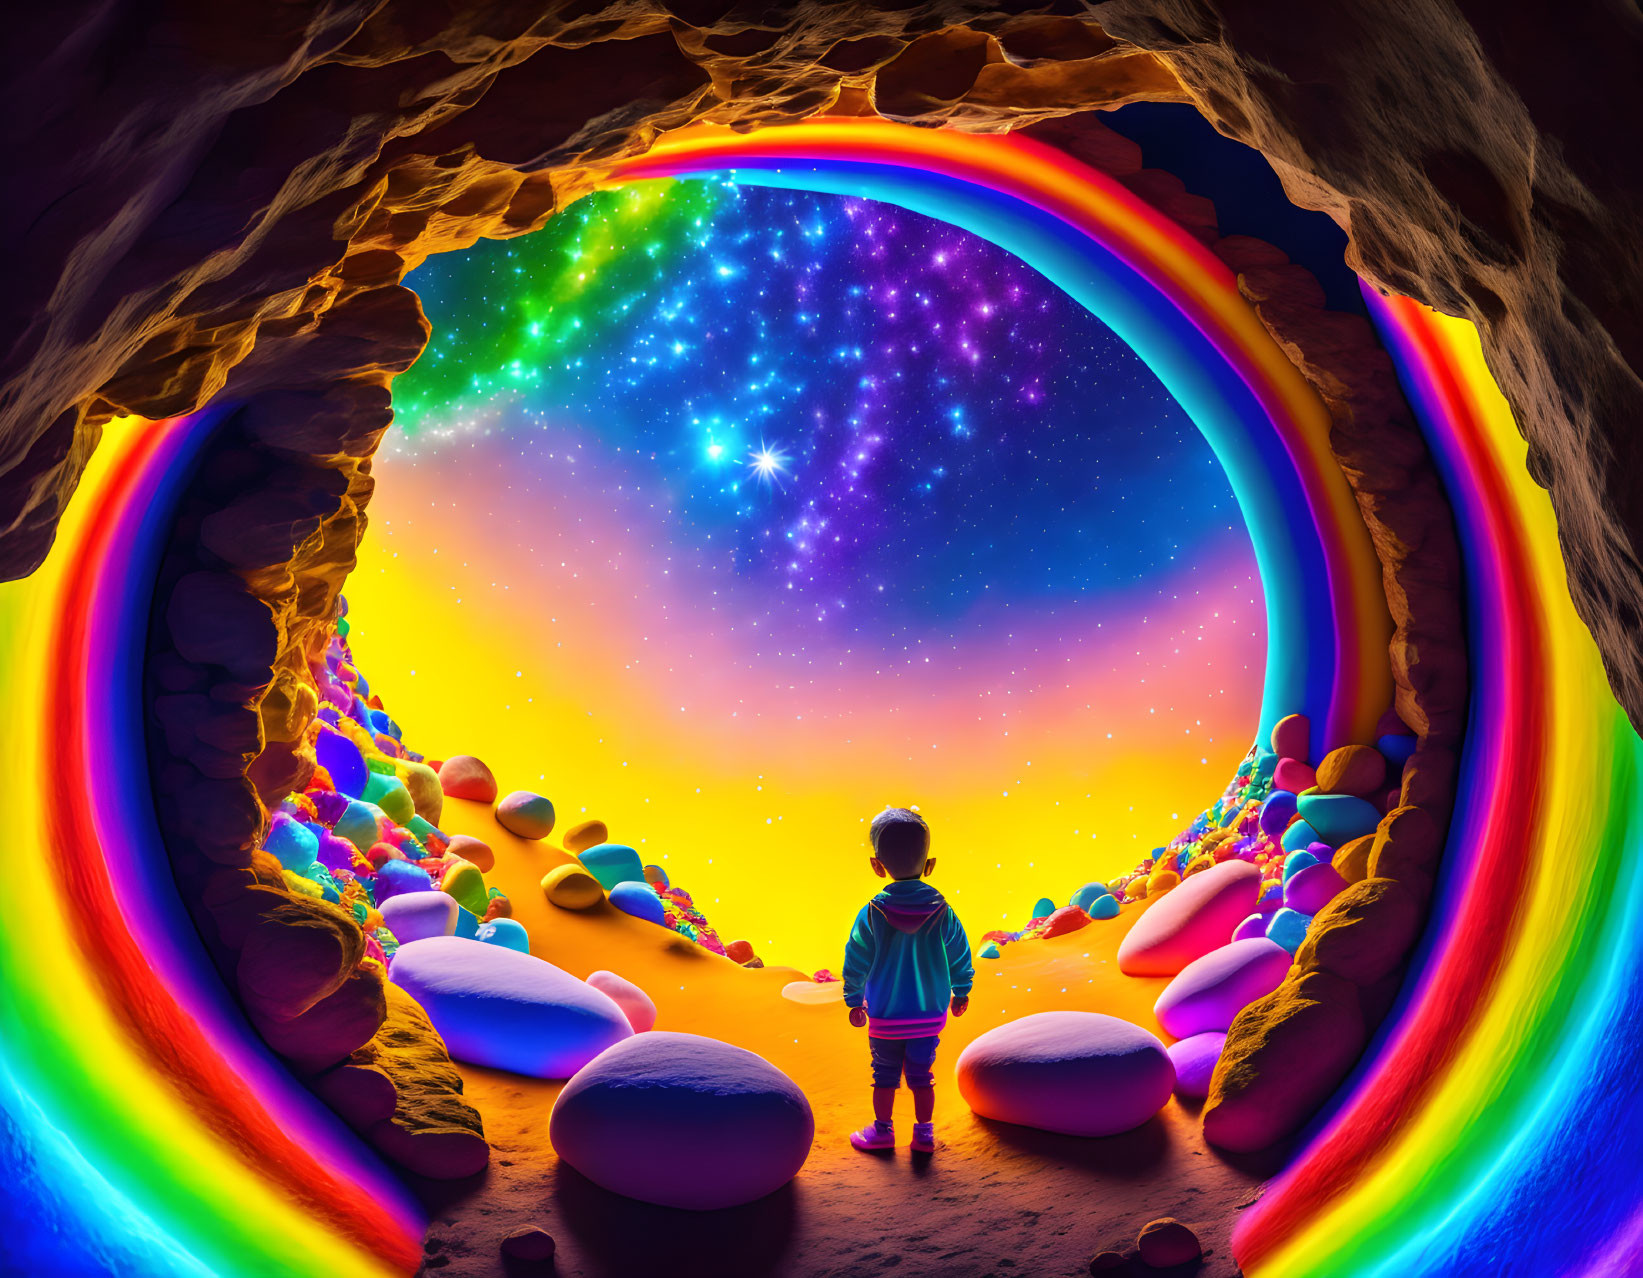 Child gazes at vibrant sky with stars, rainbow arc, and luminous stones